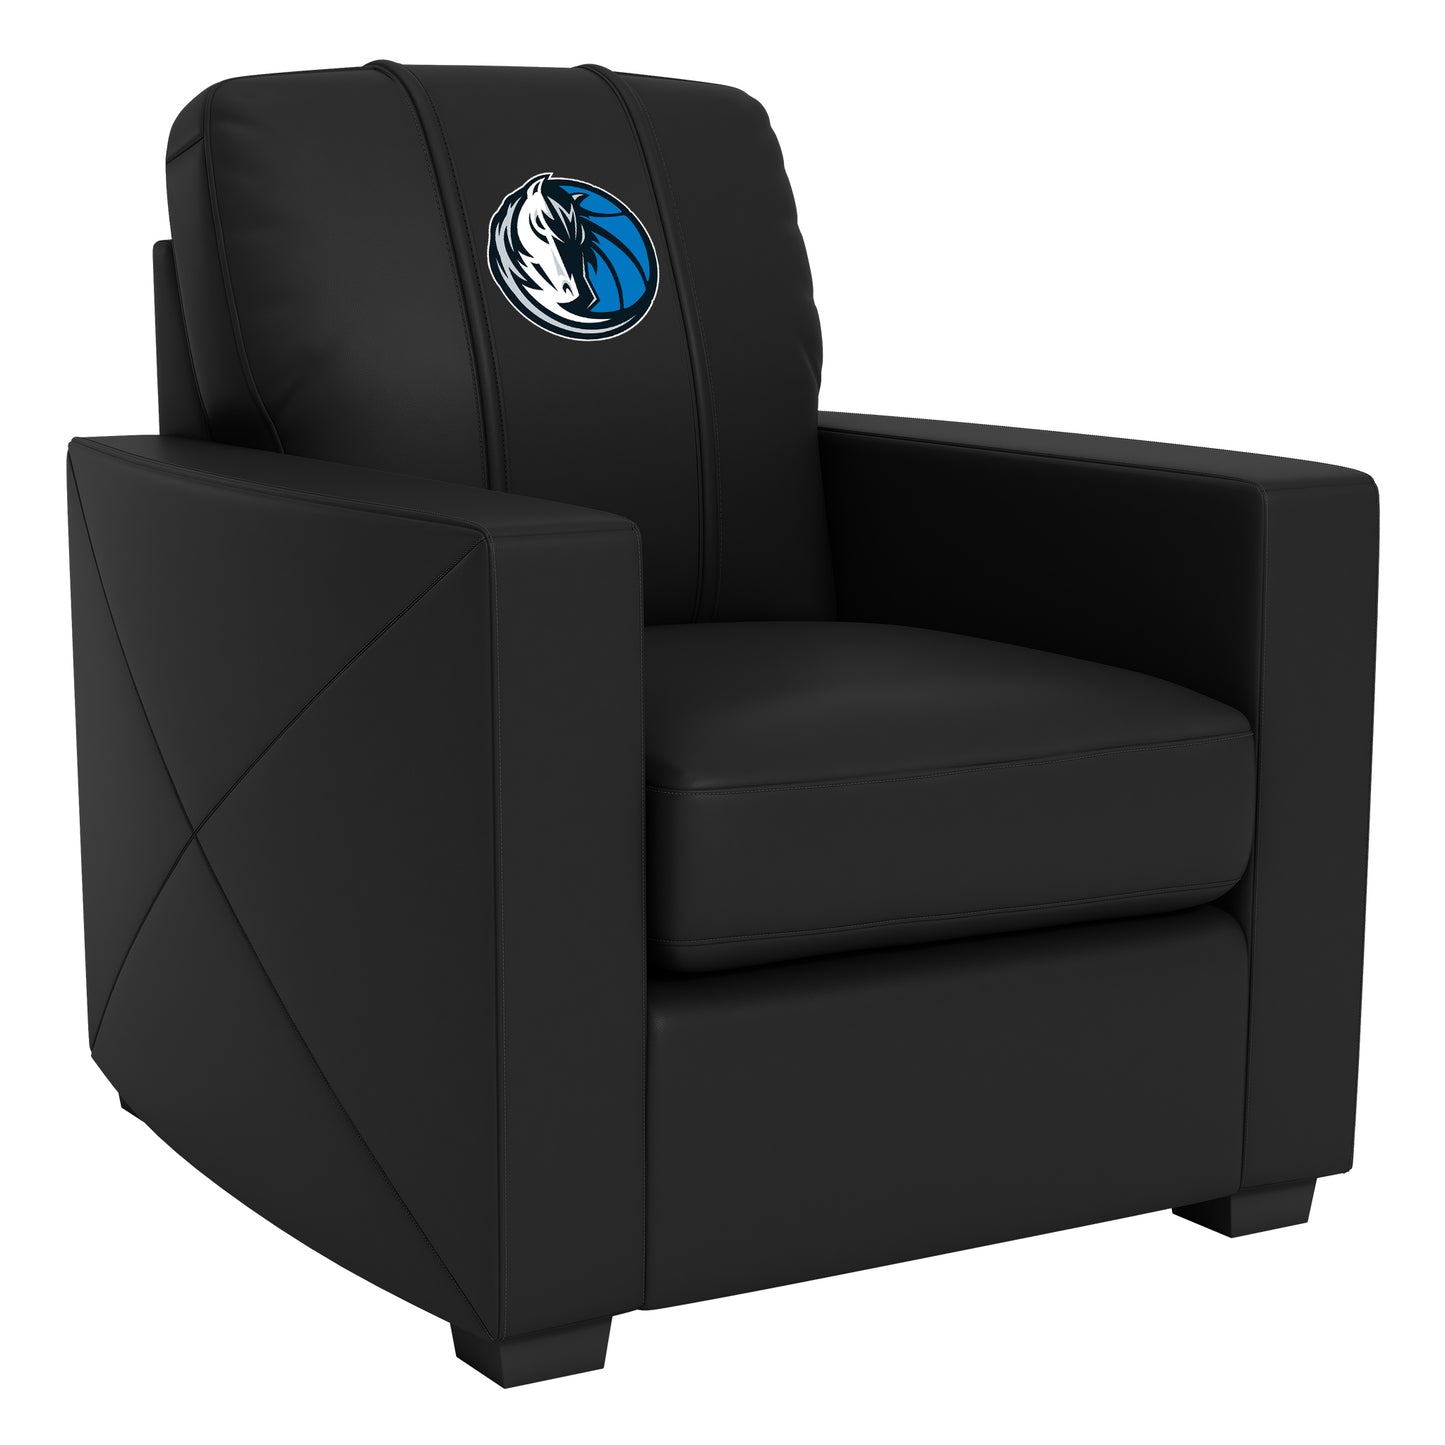 Silver Club Chair with Dallas Mavericks